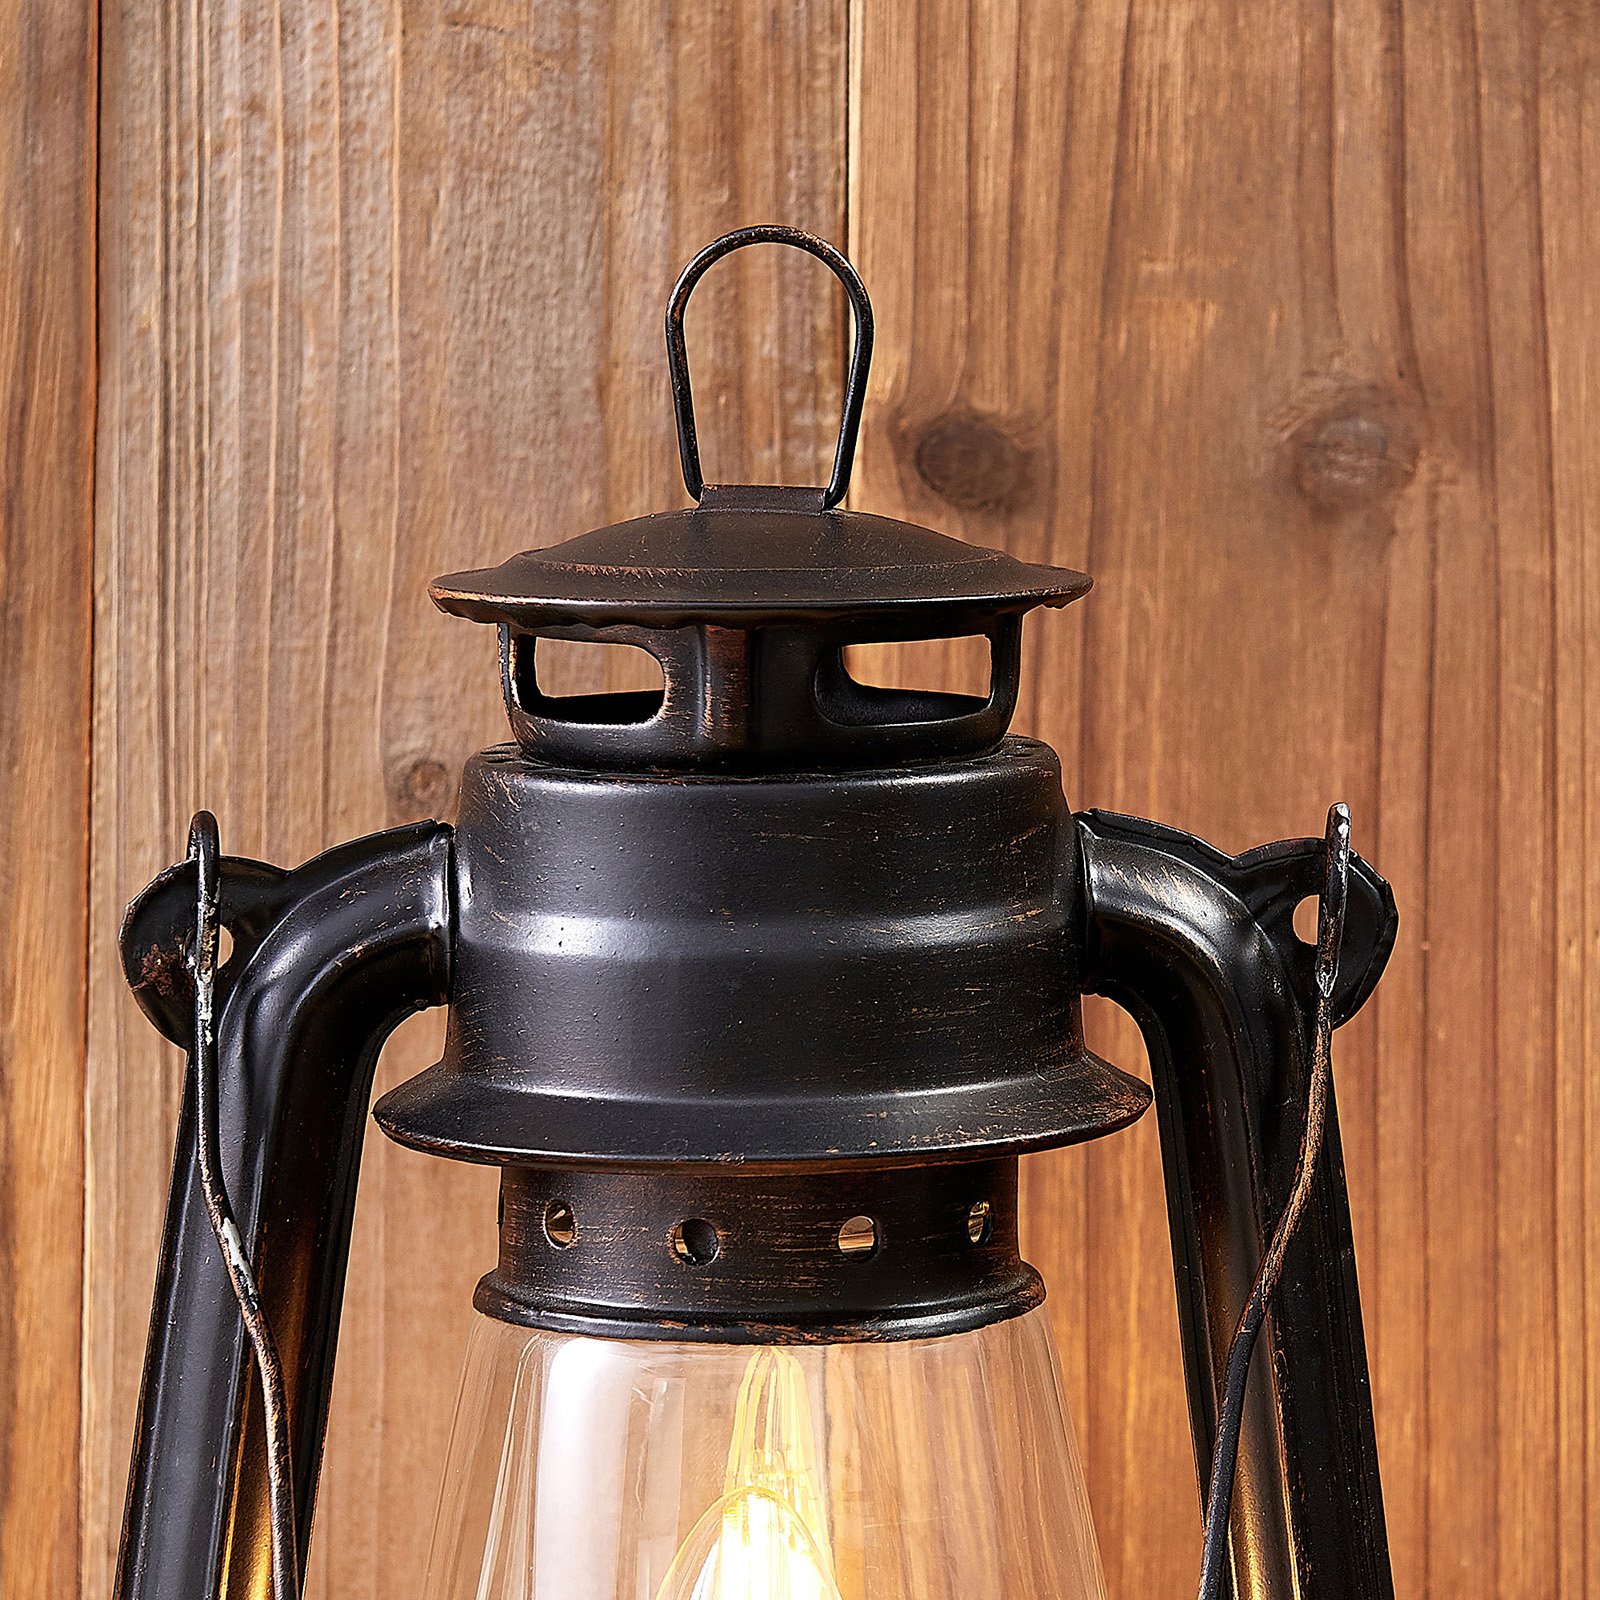 Lindby Raisa tafellamp, lantaarn, roestkleurig